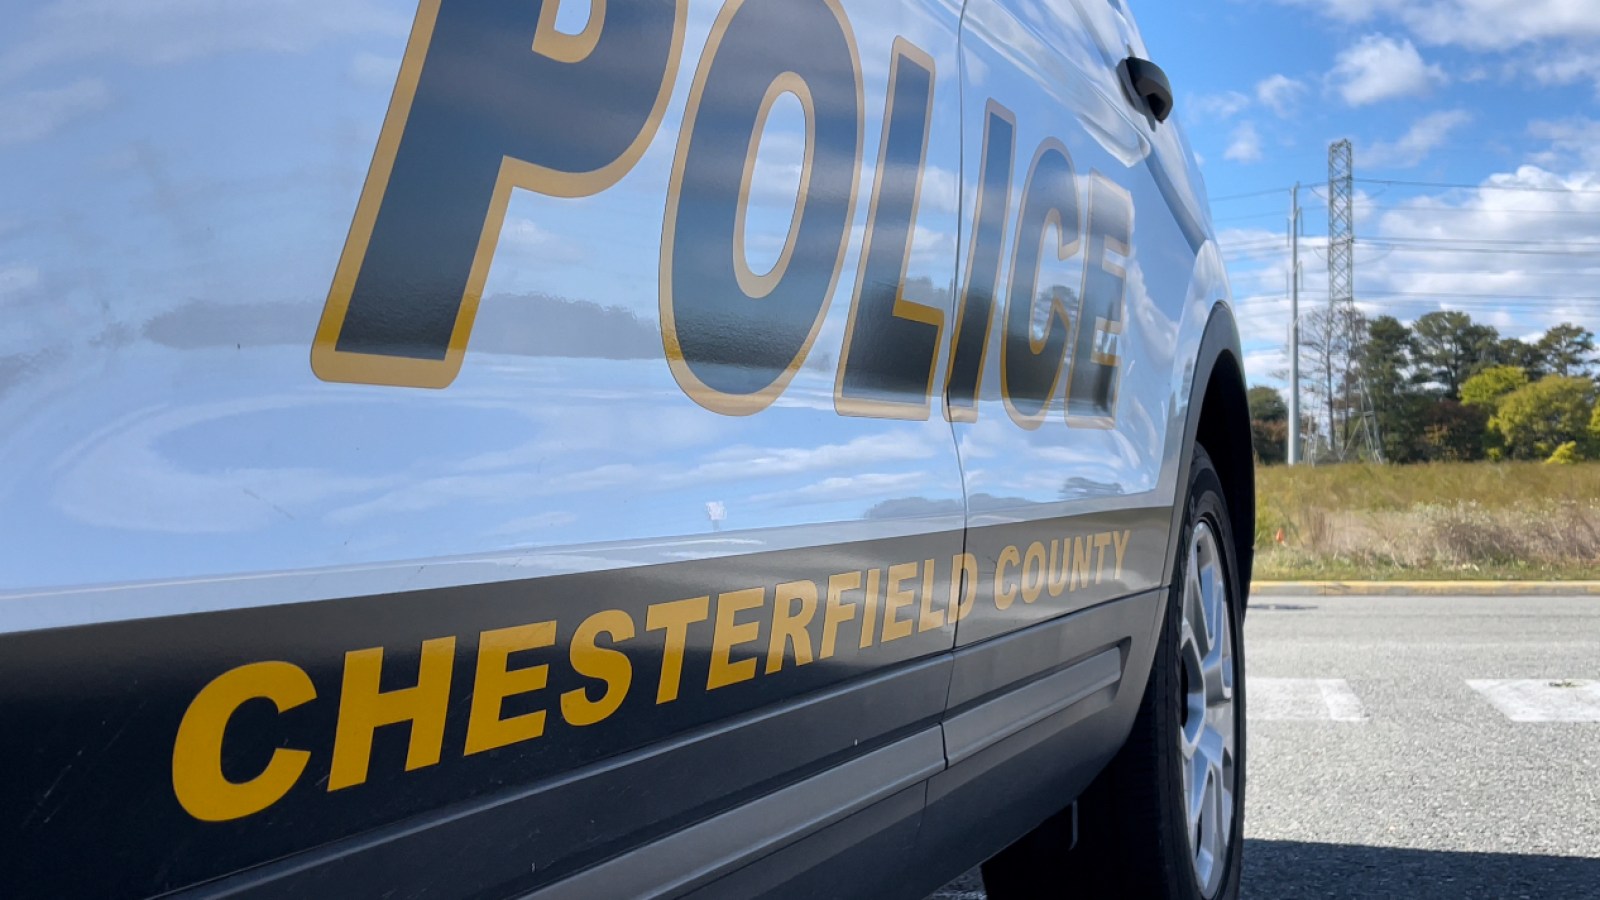 Teenager injured in Chesterfield shooting near Falling Creek